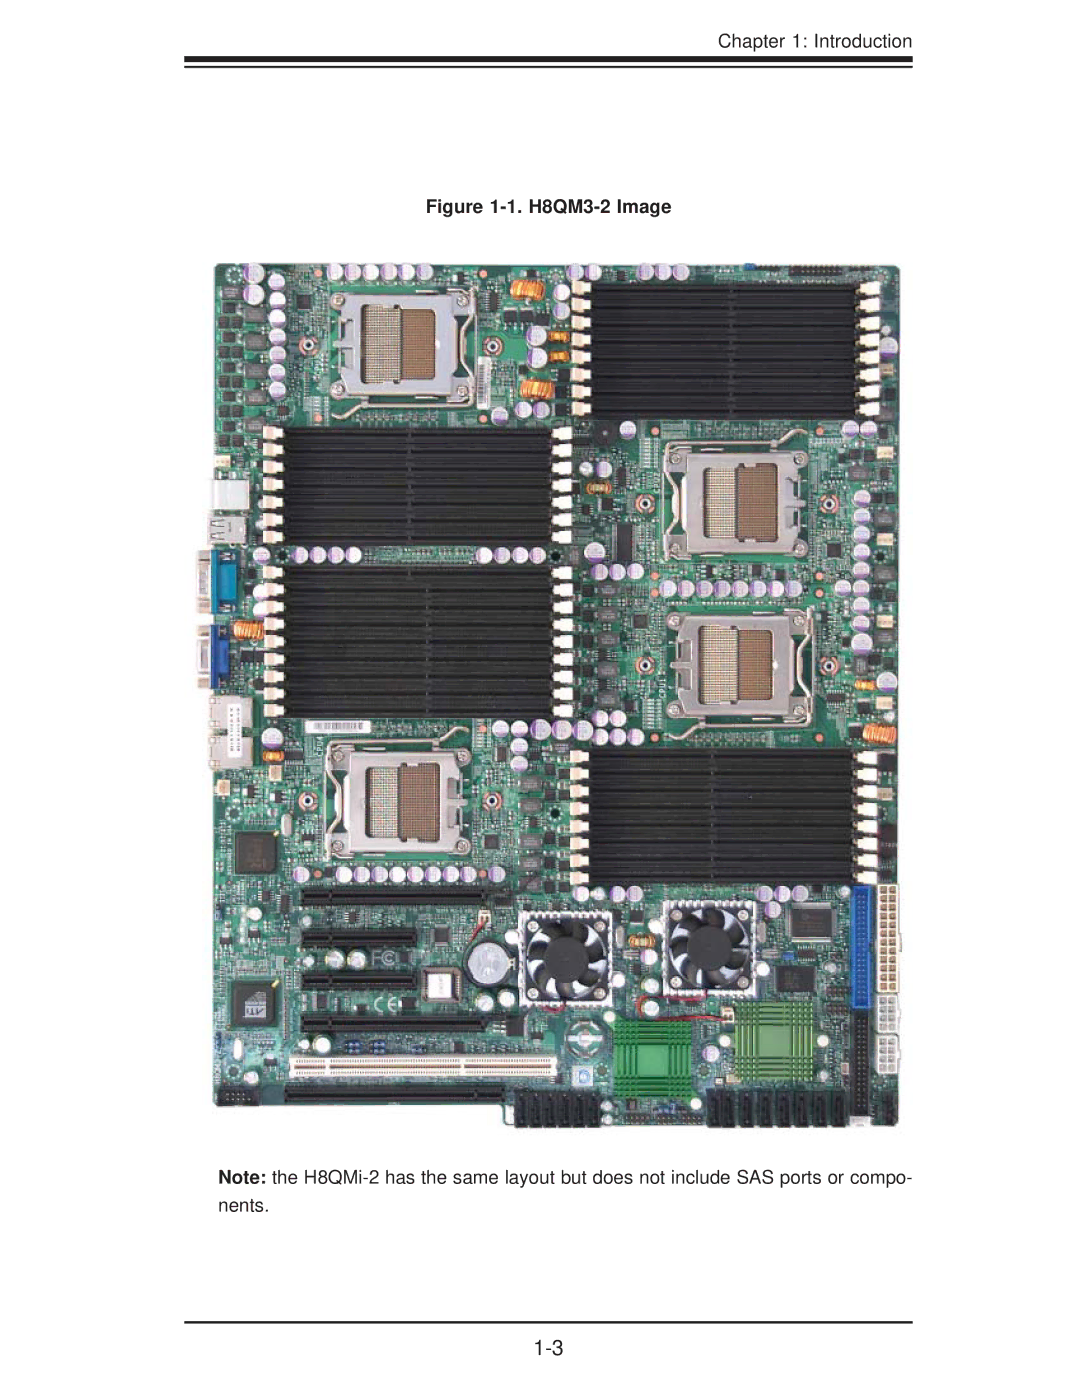 SUPER MICRO Computer user manual H8QM3-2 Image 